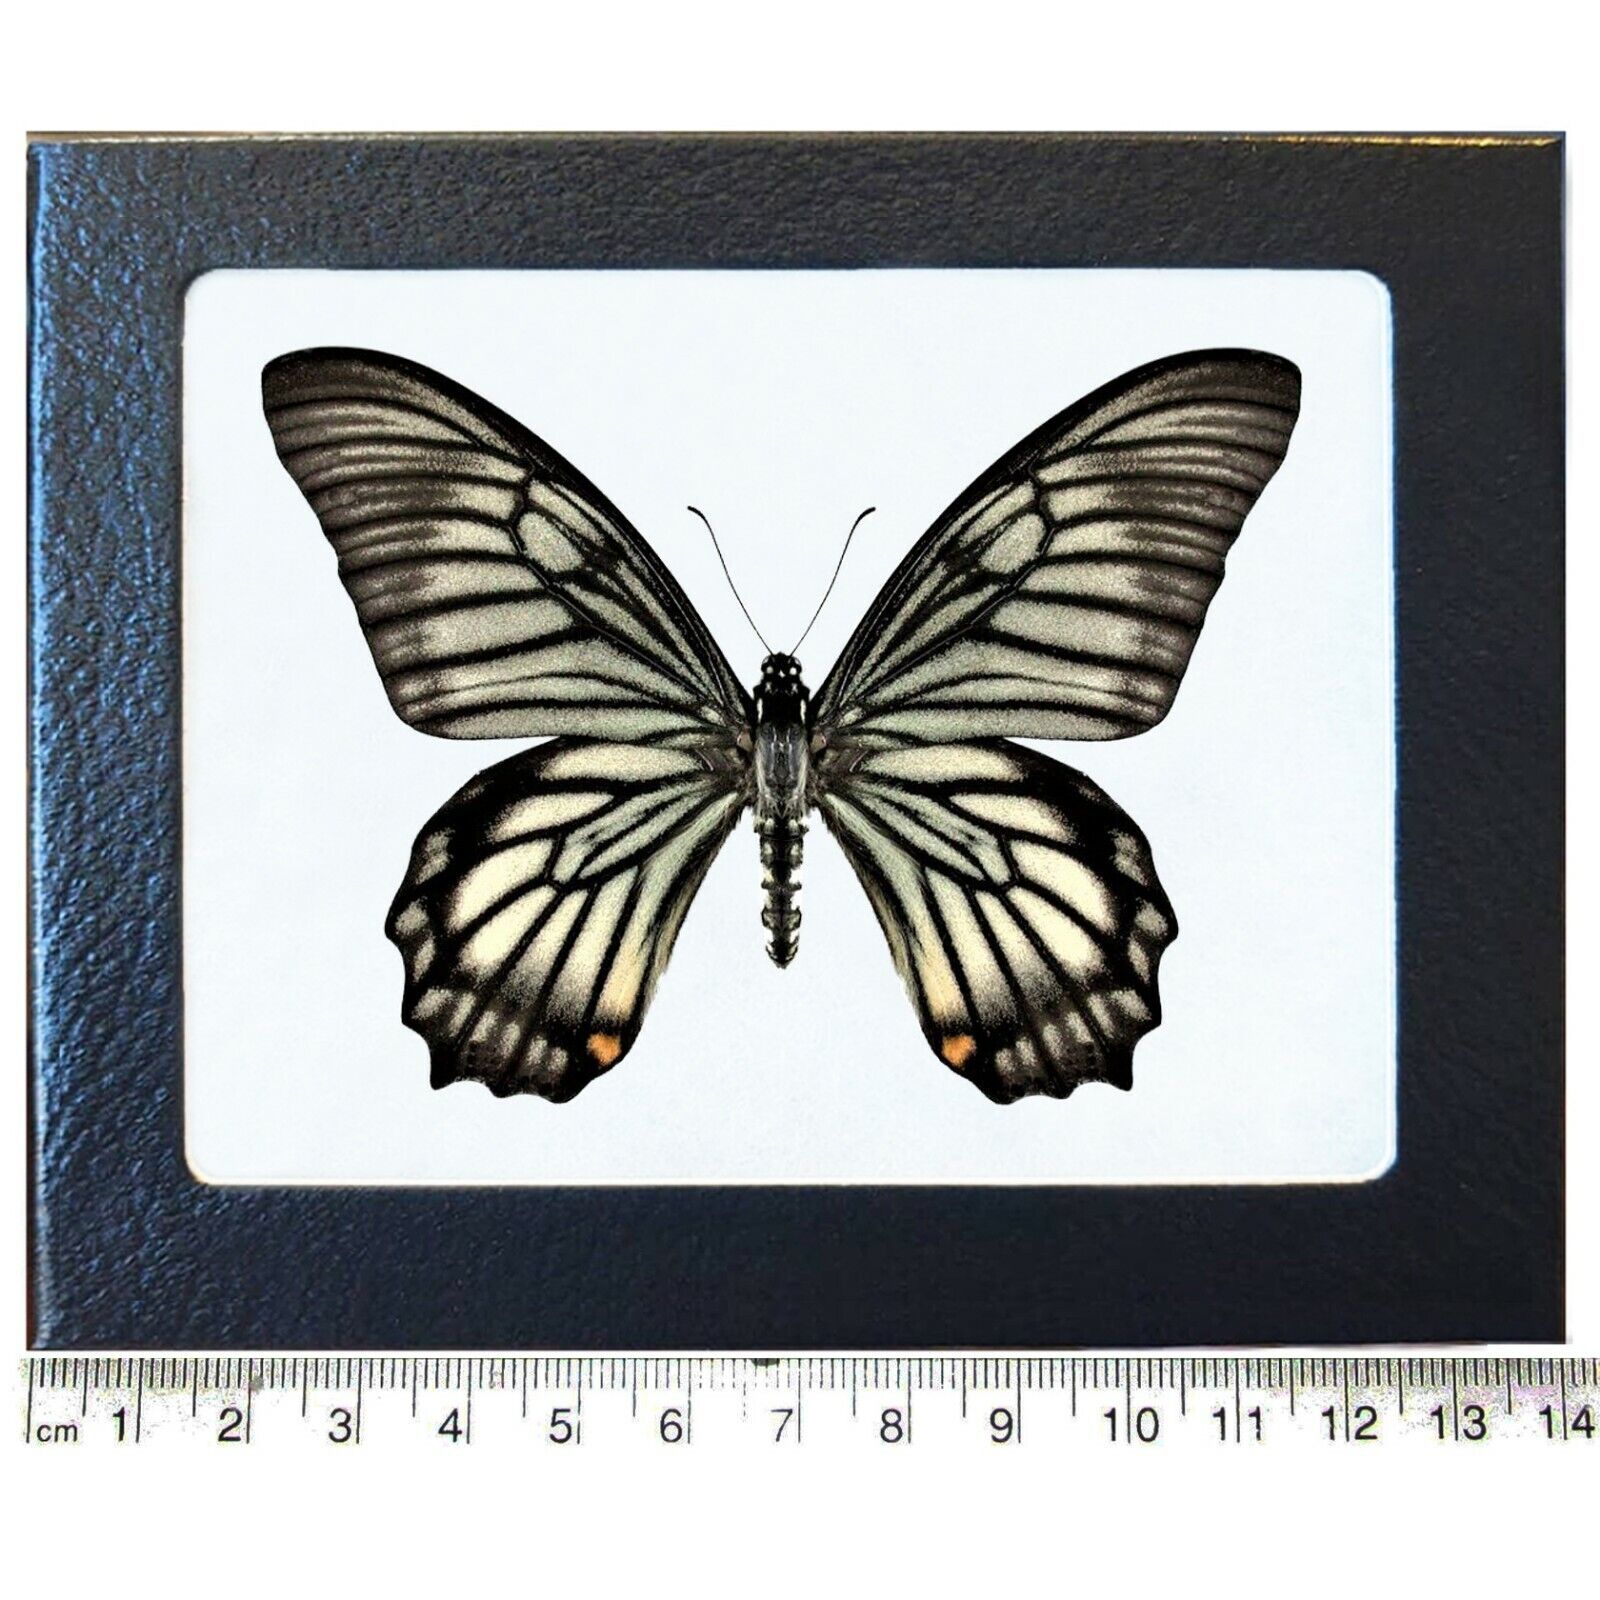 Chilasa veiovis black white butterfly Indonesia Framed